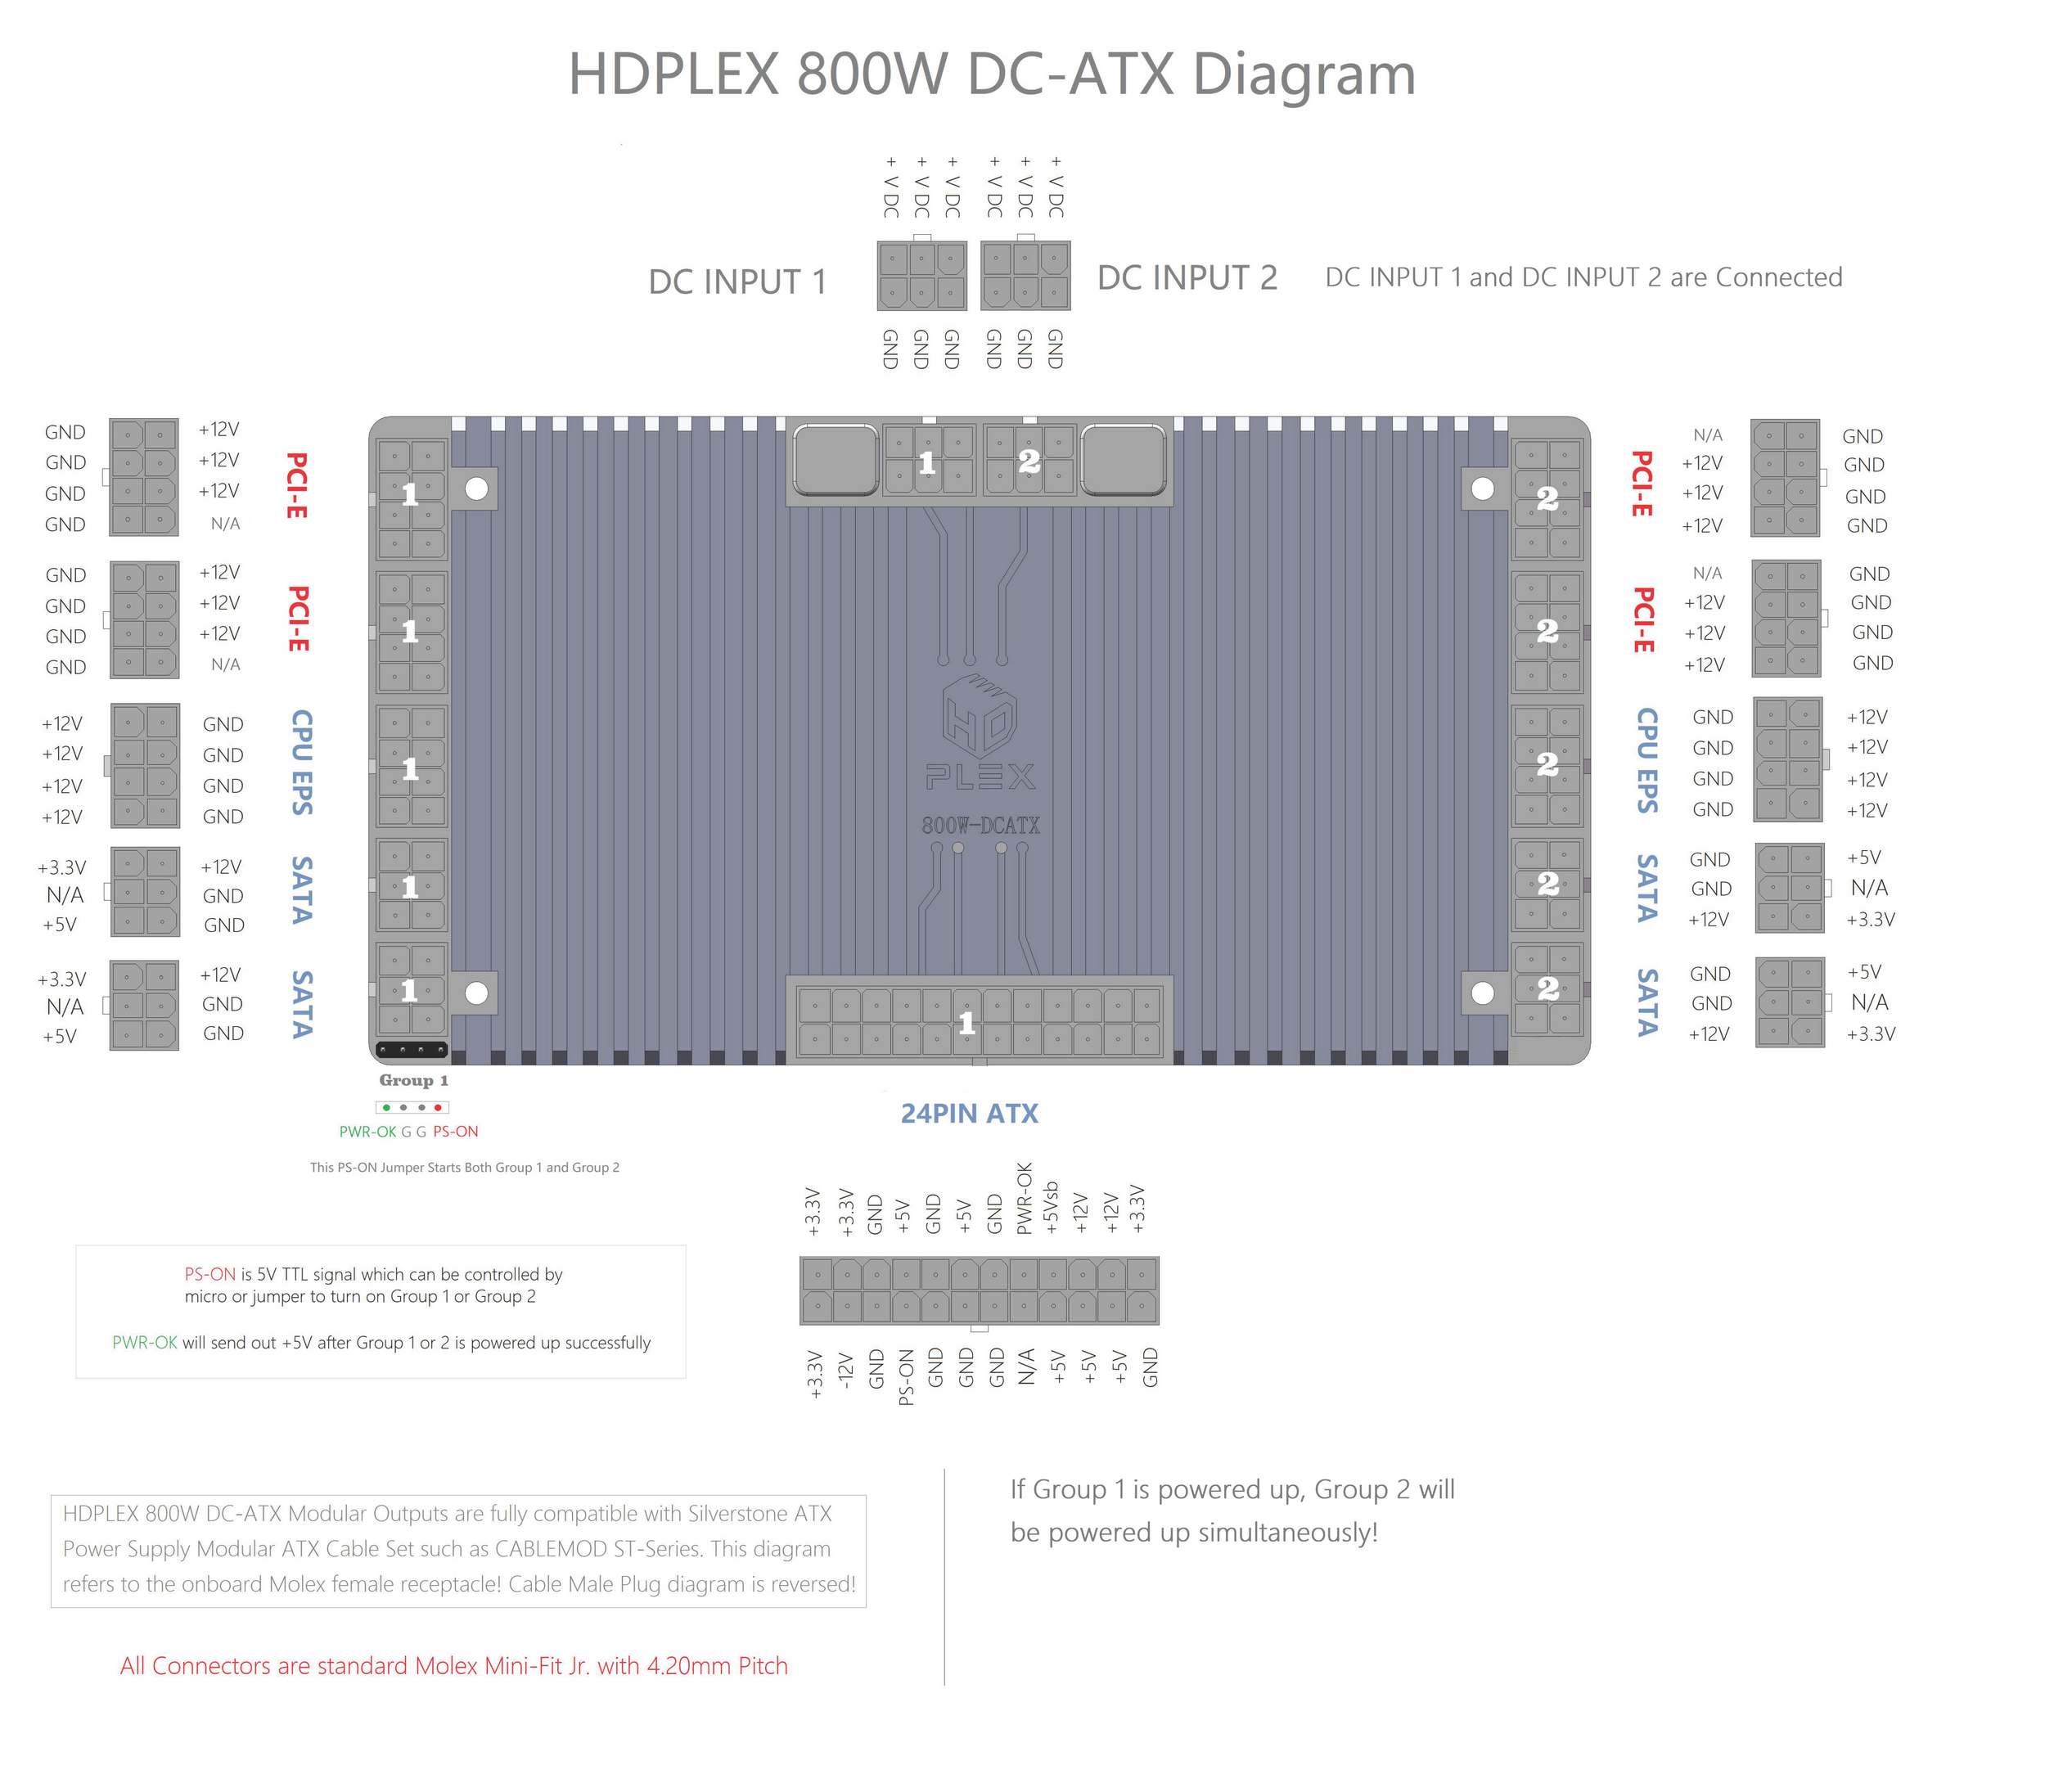 HDPLEX 800W DC-ATX Converter Diagram